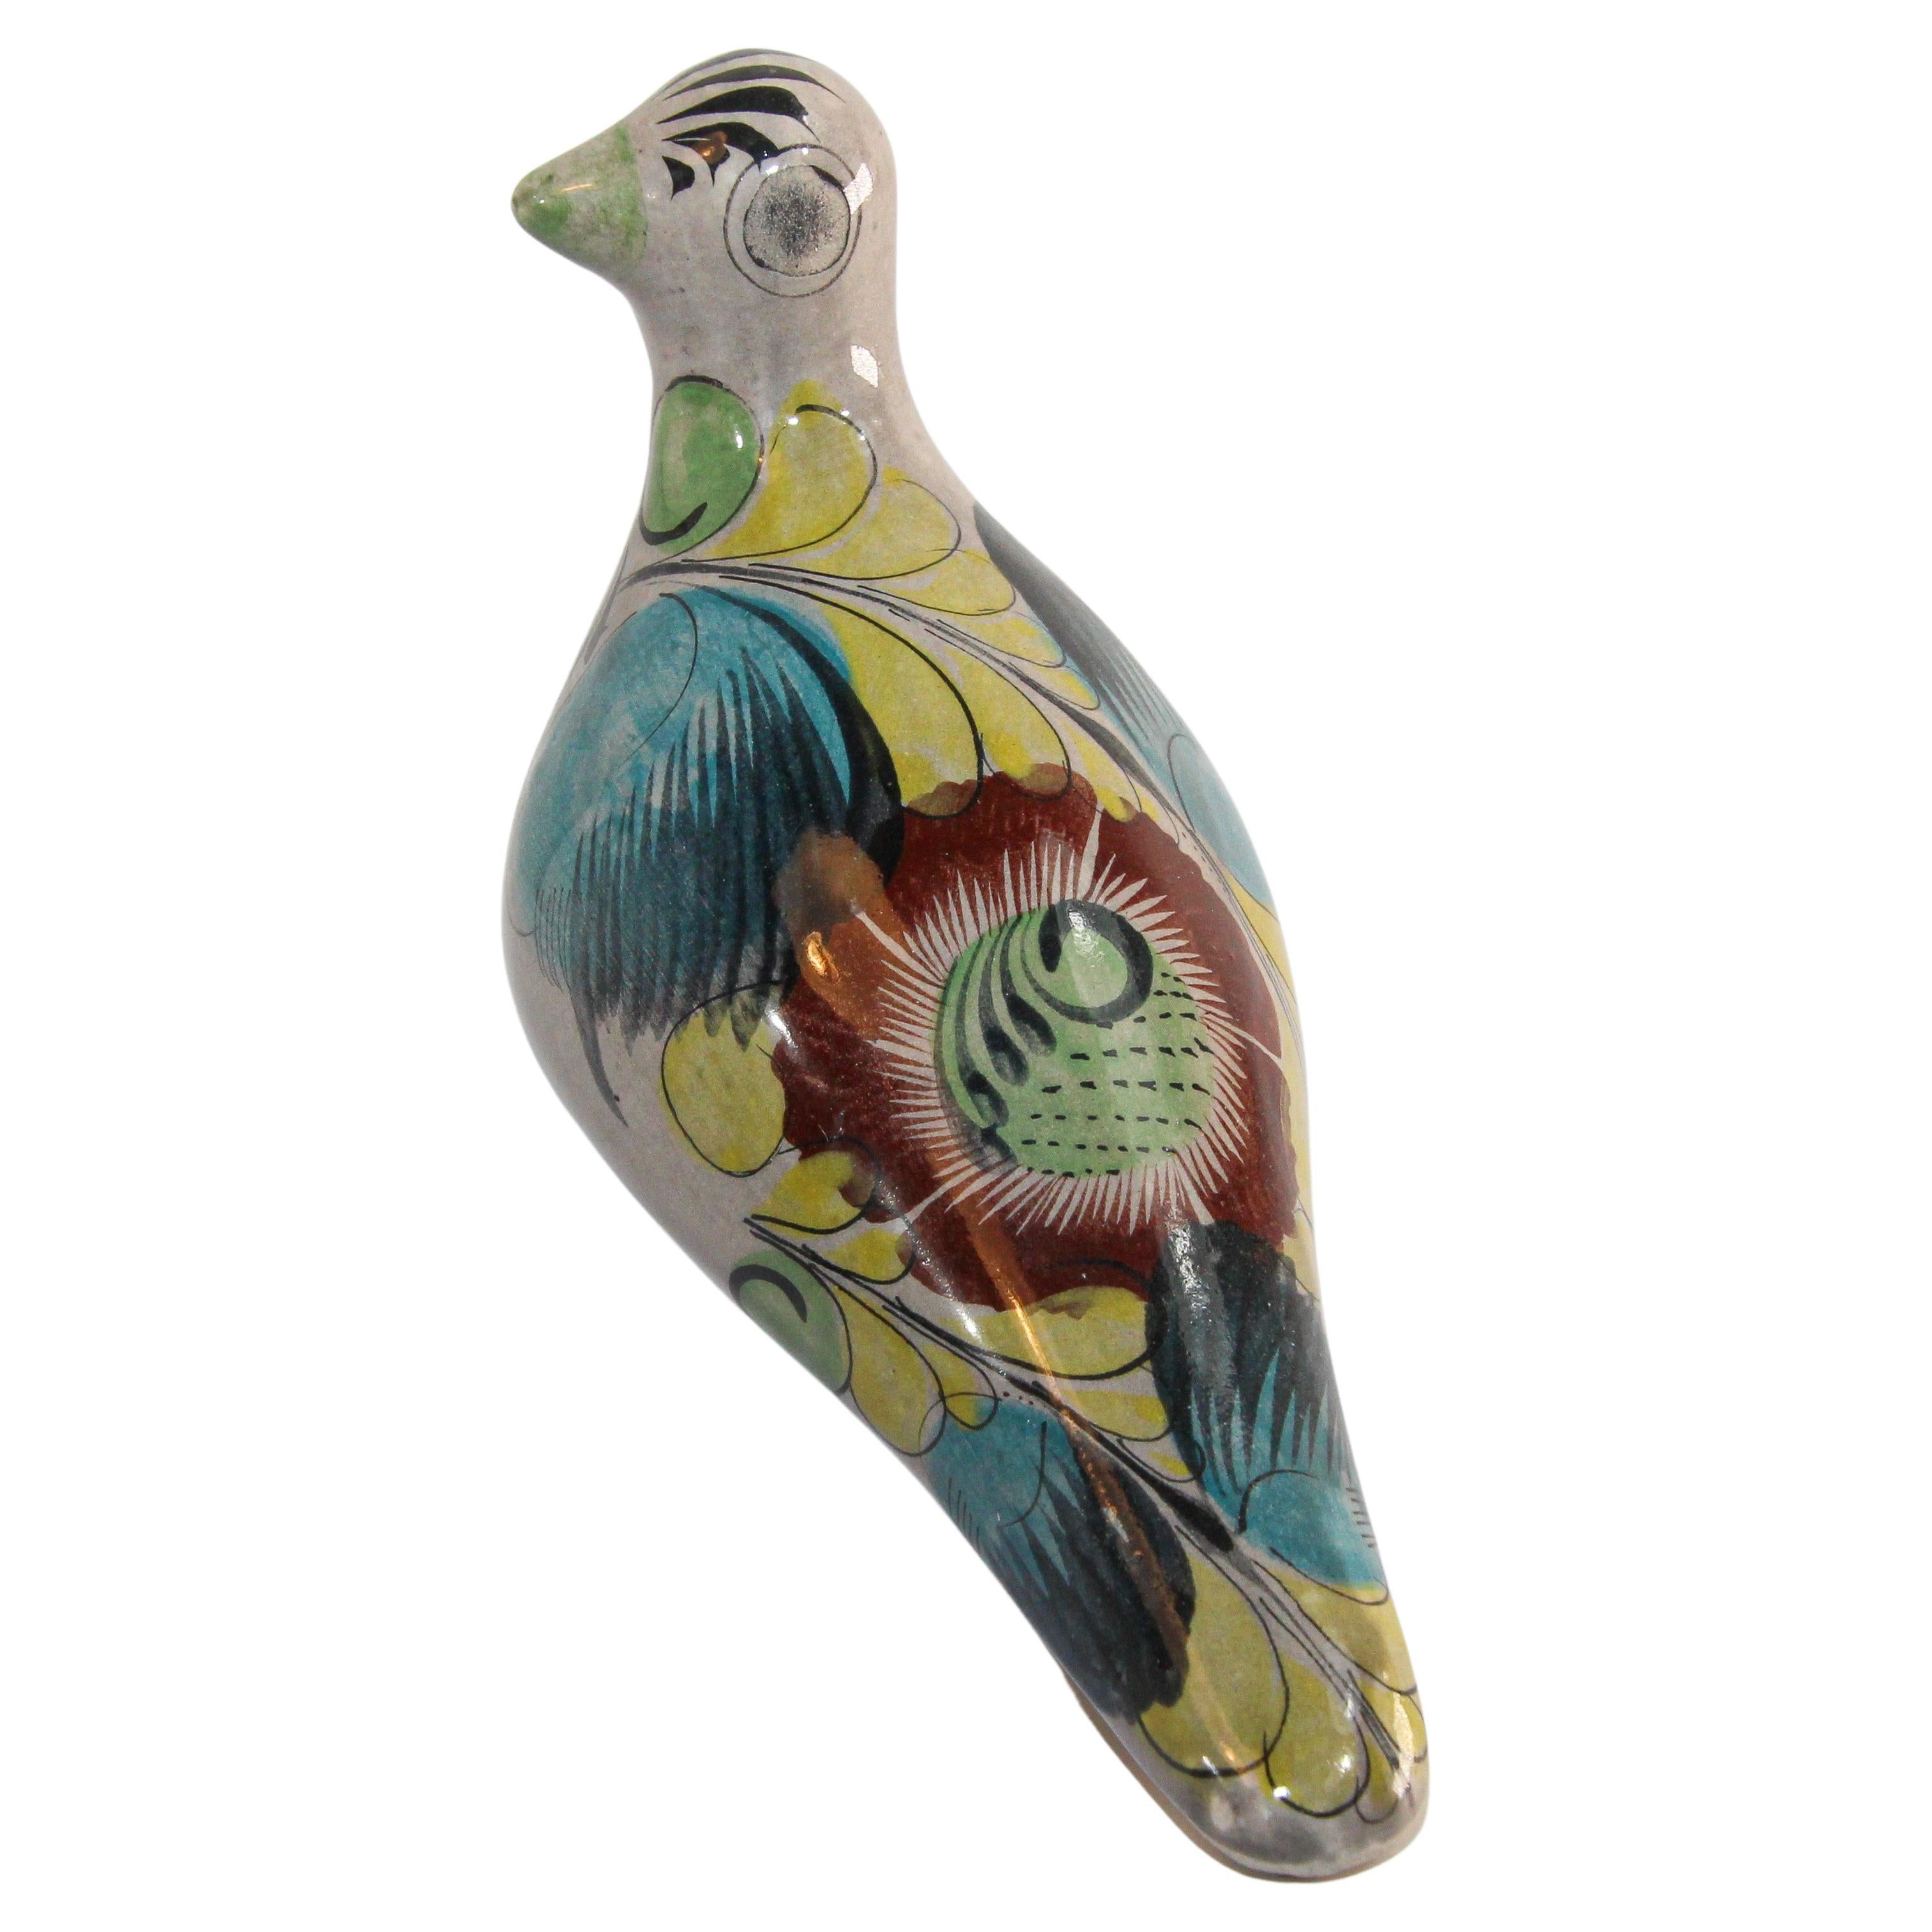 Circa 1970's Nesting Dove Glazed Clay Ceramic Pottery Made in Mexico Vintage Tonala Hand Crafted Mexican Pottery Bird Art Pottery